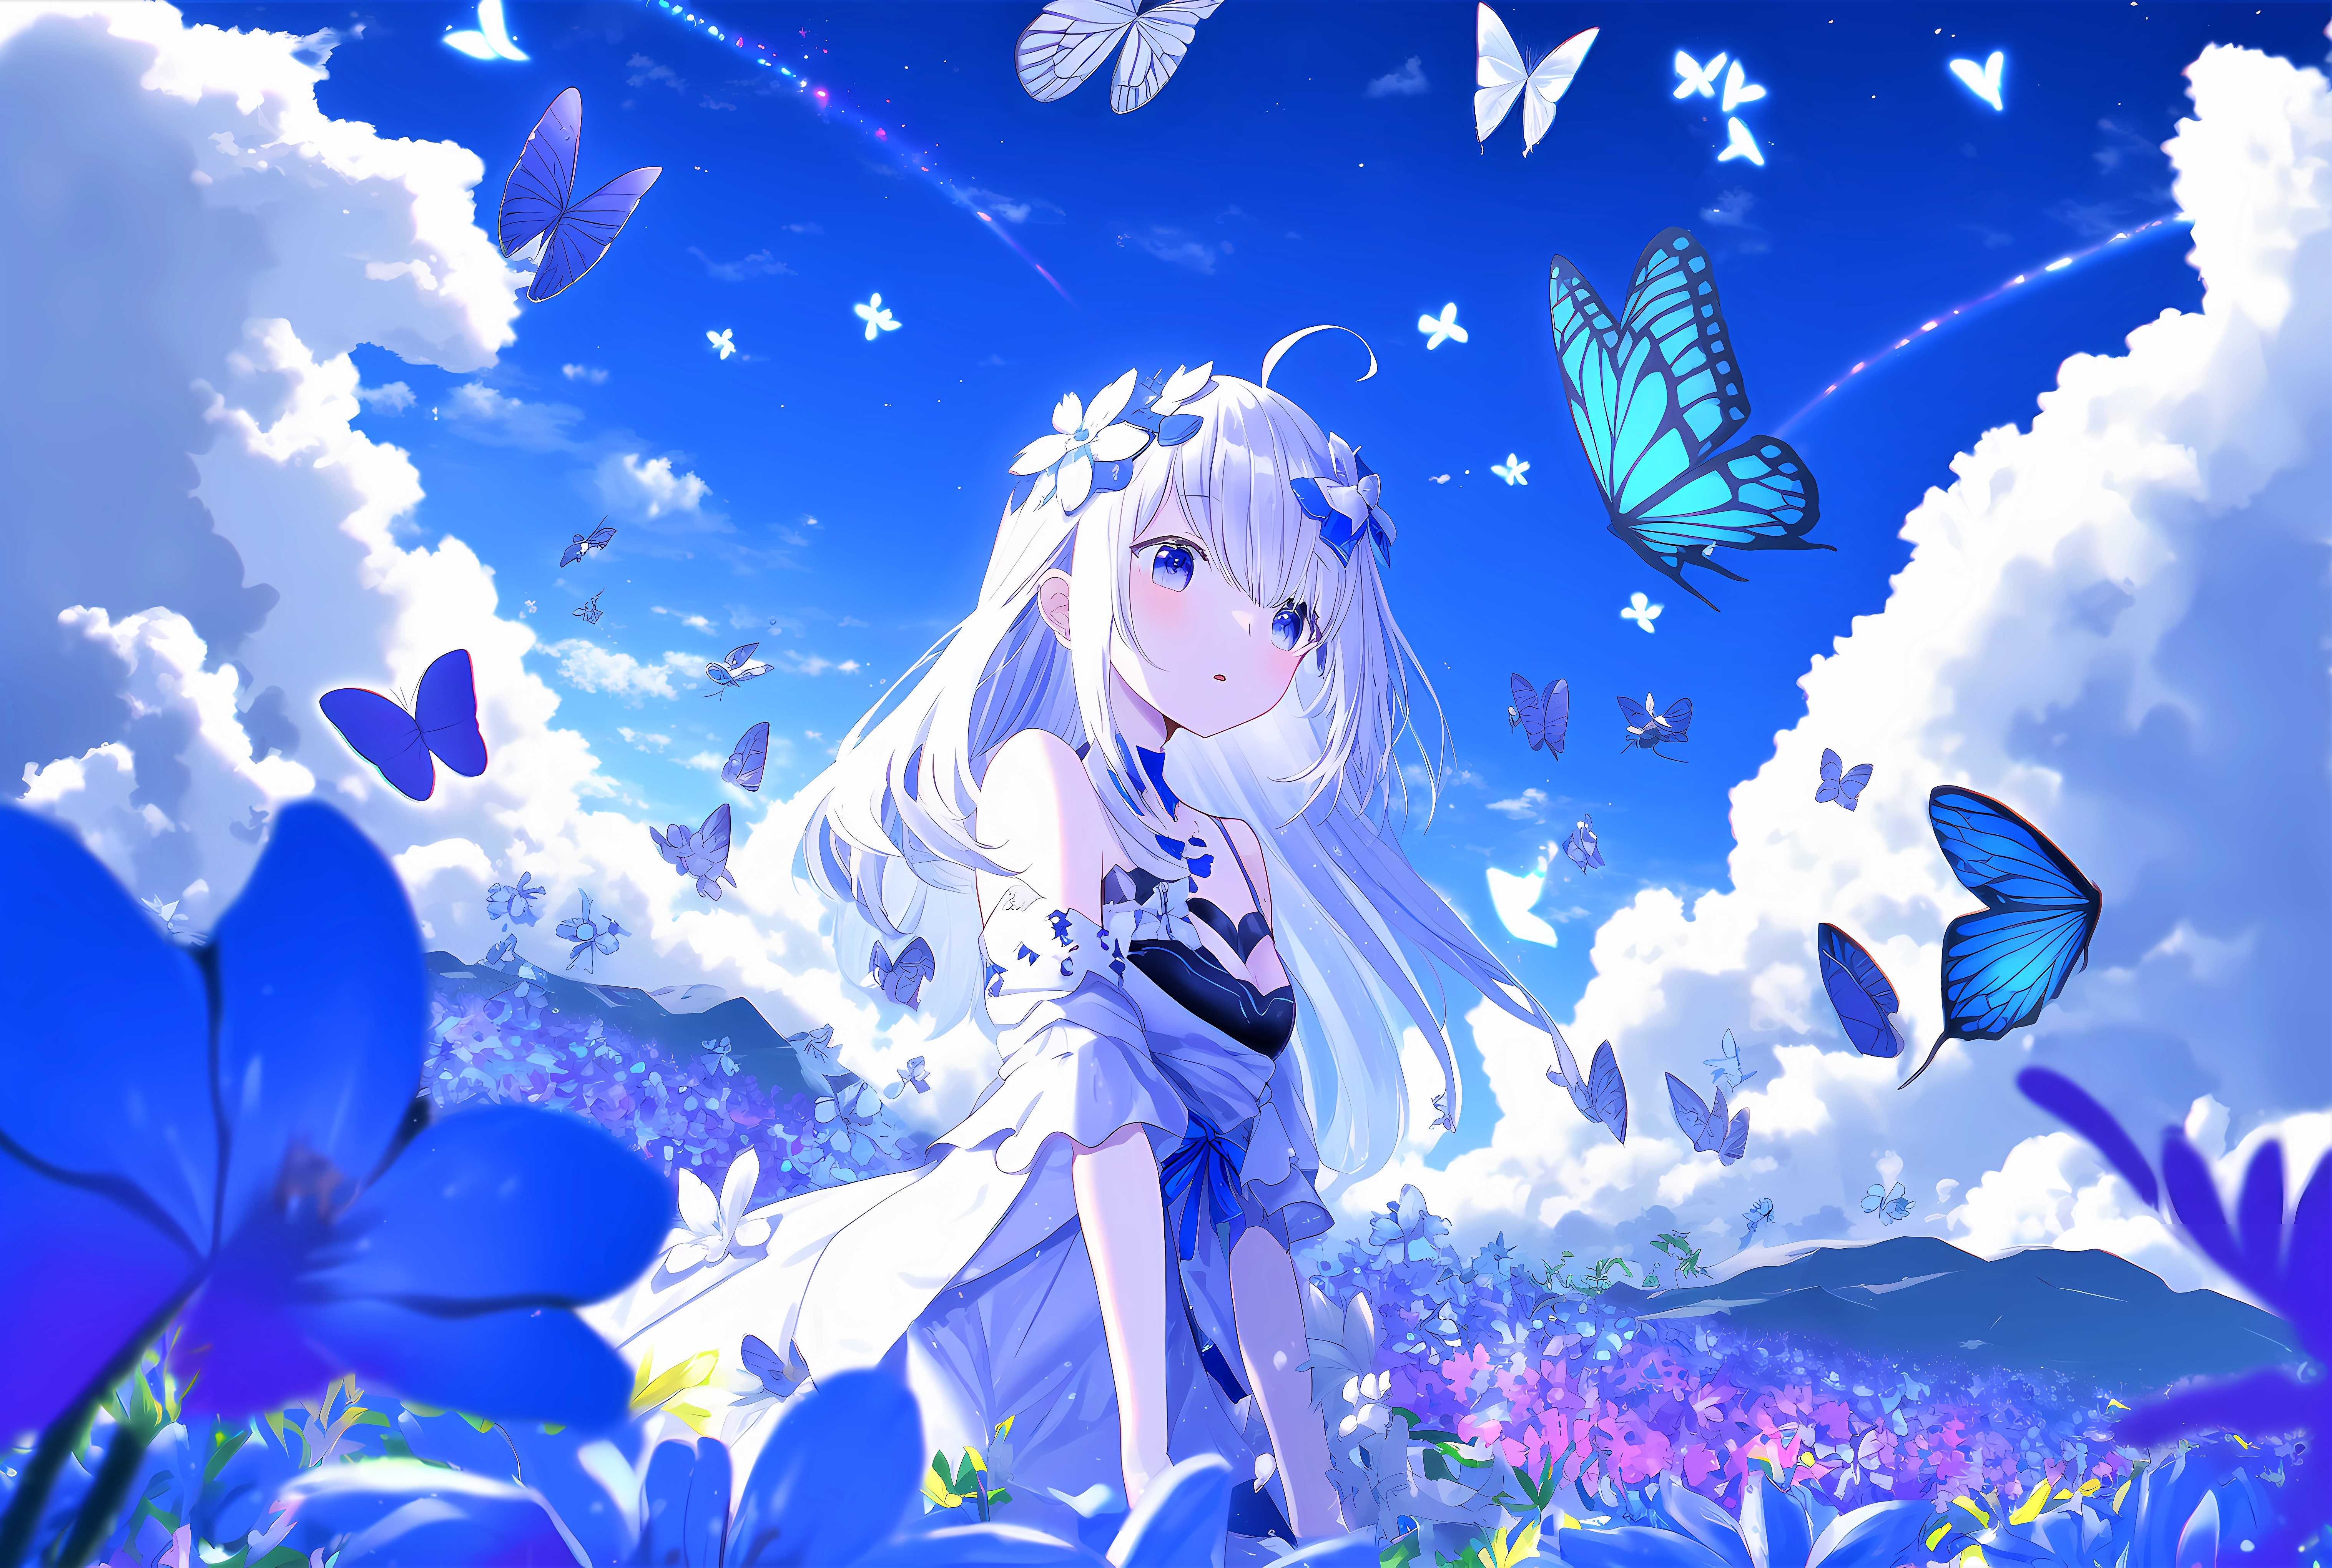 Cute Anime Girl & Butterflies Purple Wallpaper - Cute Girl Wallpaper